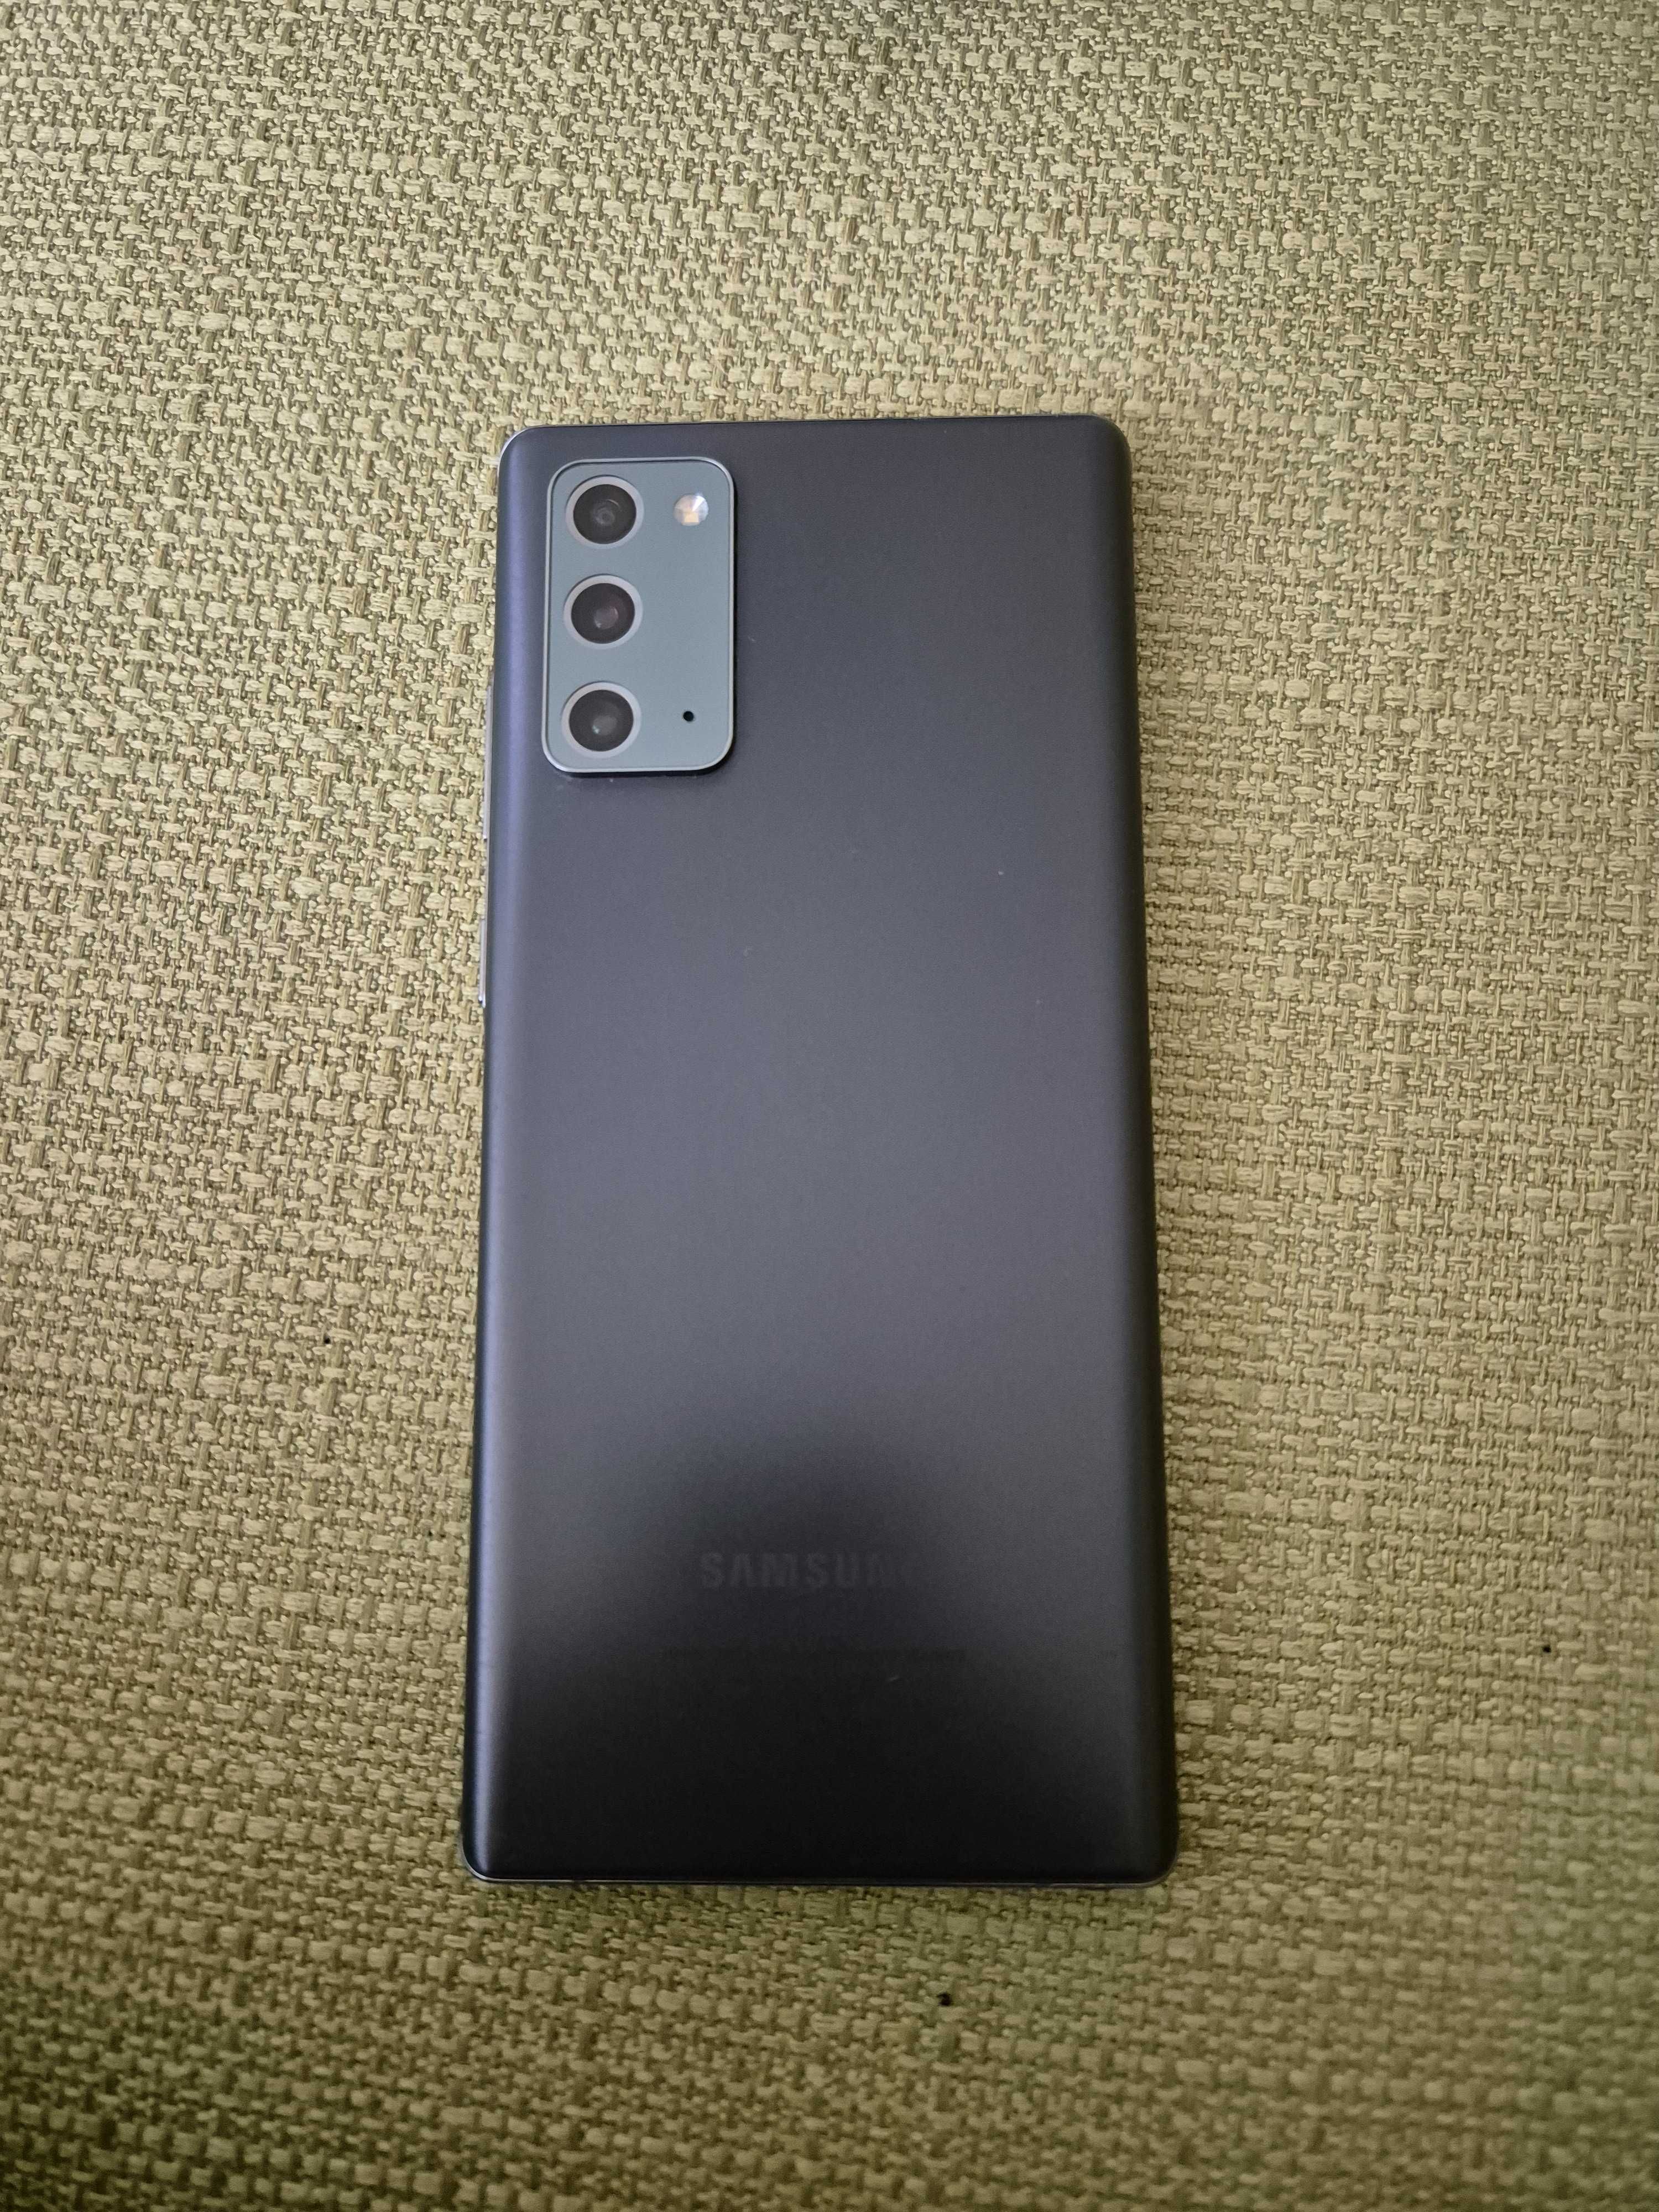 Samsung Galaxy Note 20